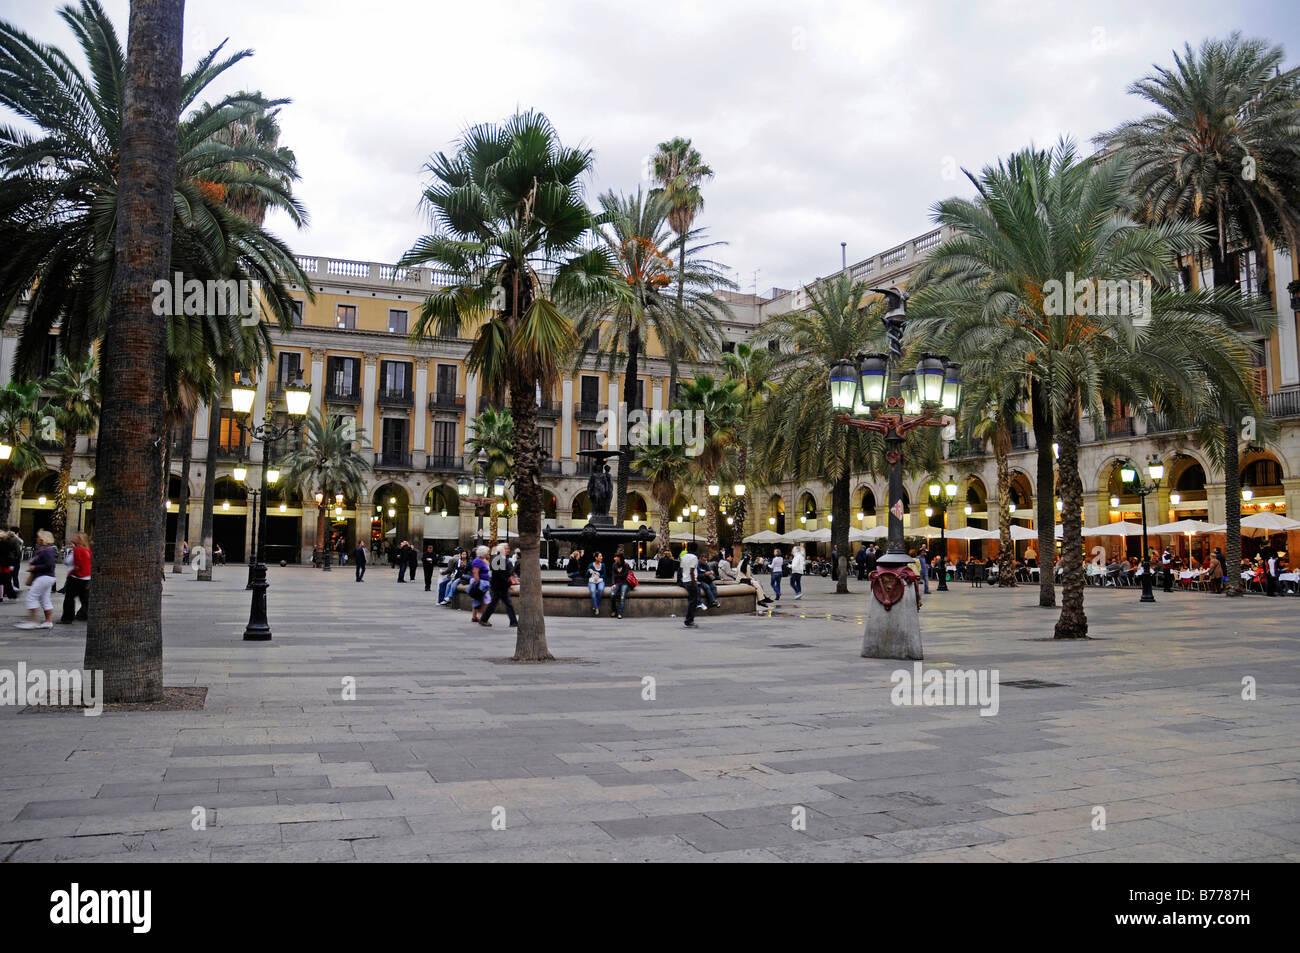 Placa Reial Square, people, palm trees, dusk, evening, Barcelona, Catalonia, Spain, Europe Stock Photo